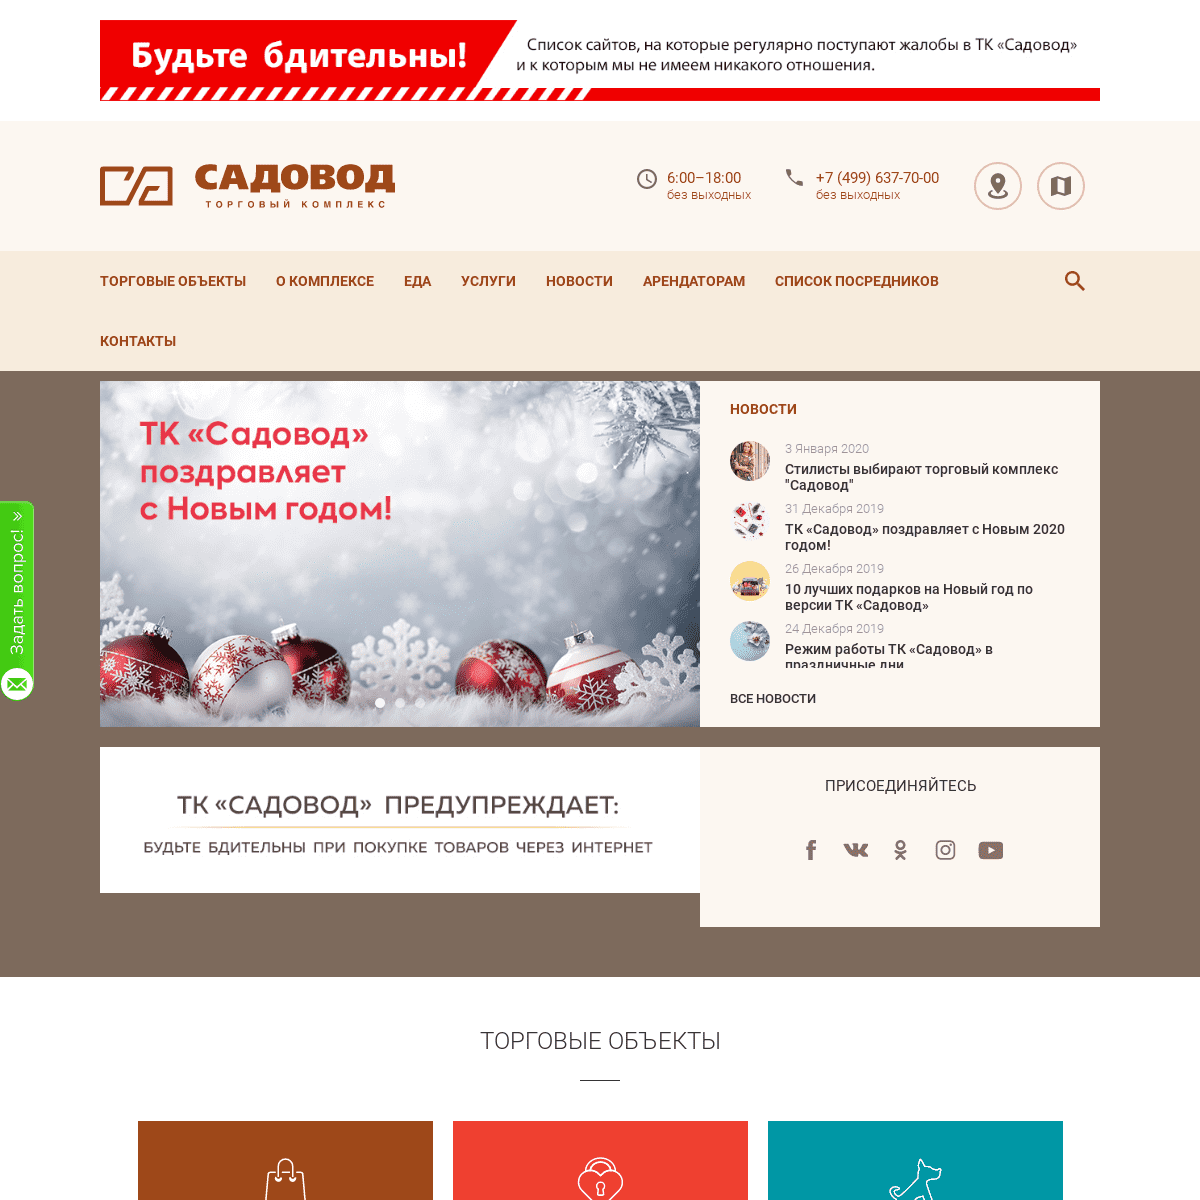 A complete backup of sadovodtk.ru